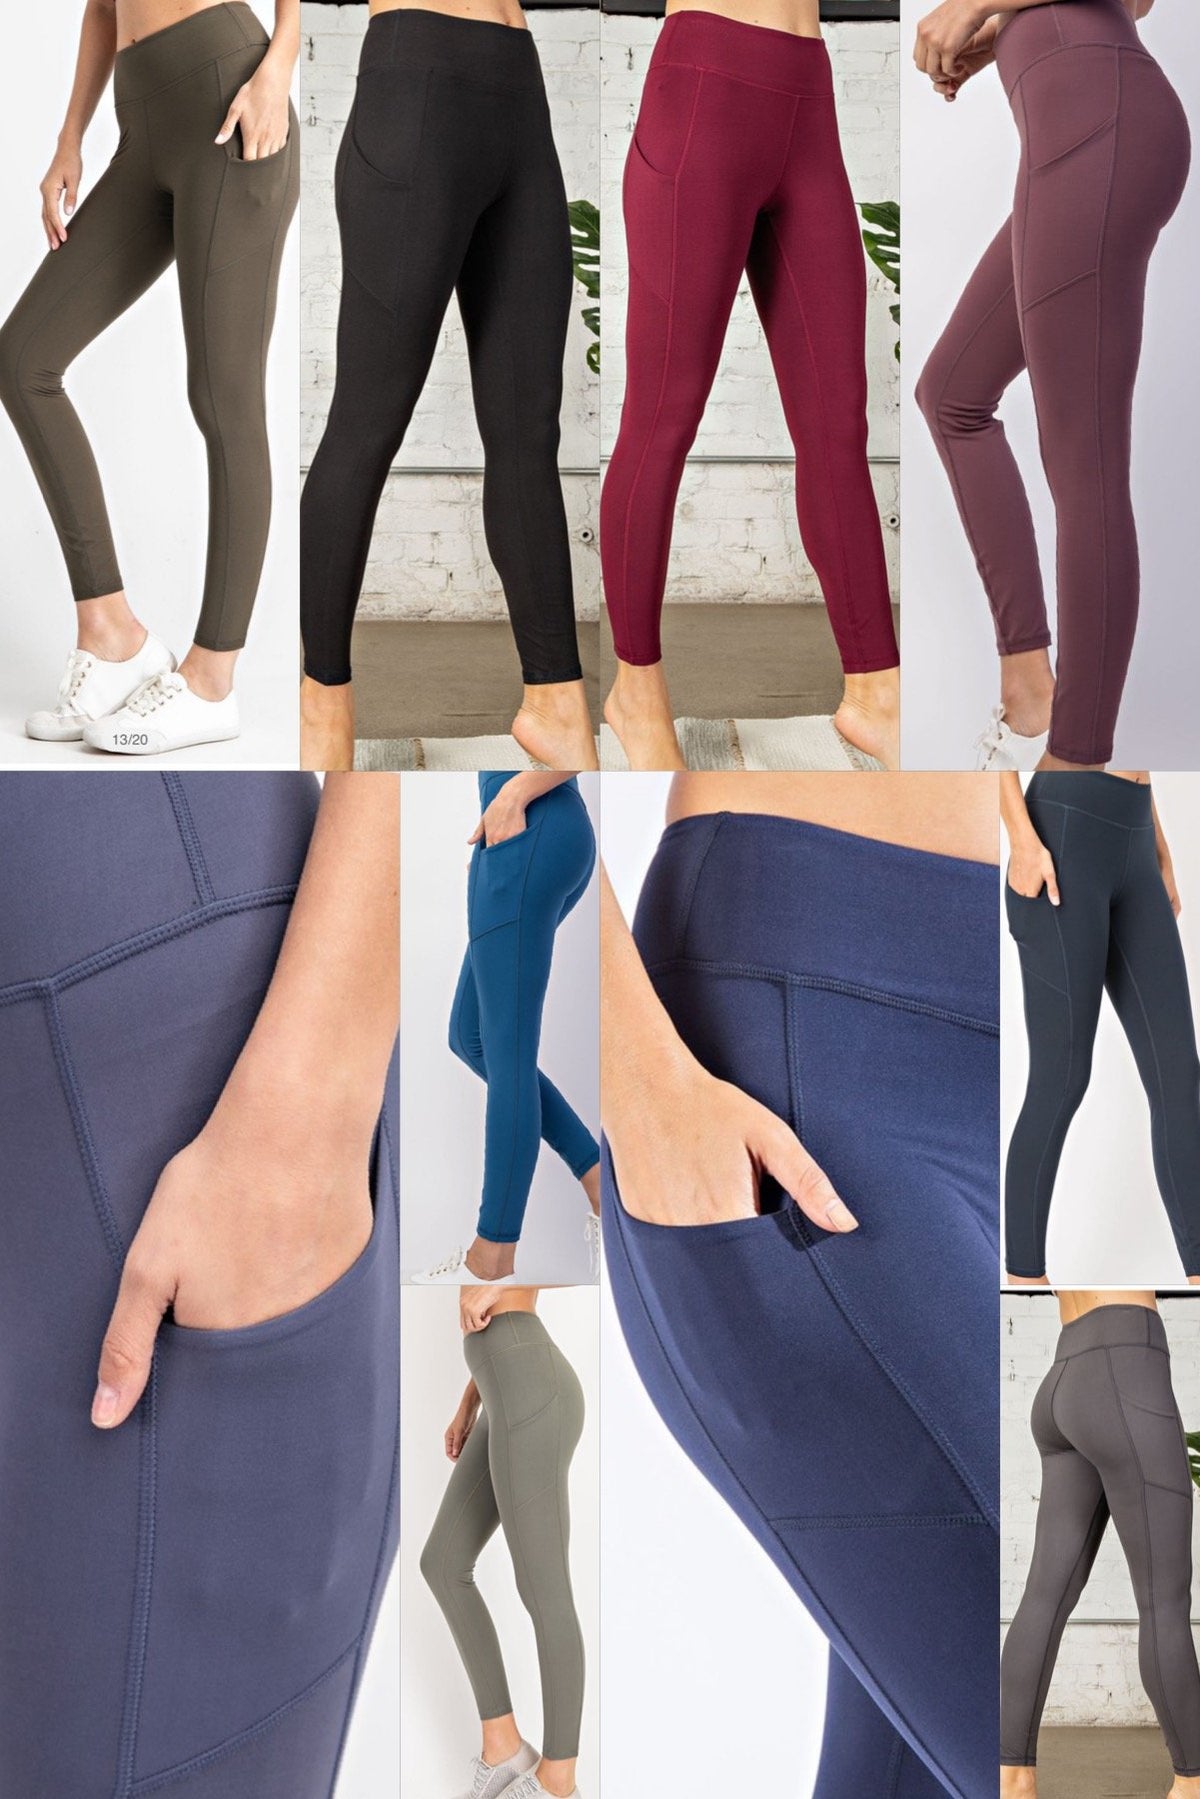 New Obsession High Waisted Full Length Yoga Leggings w/Side Pockets - October Restock!